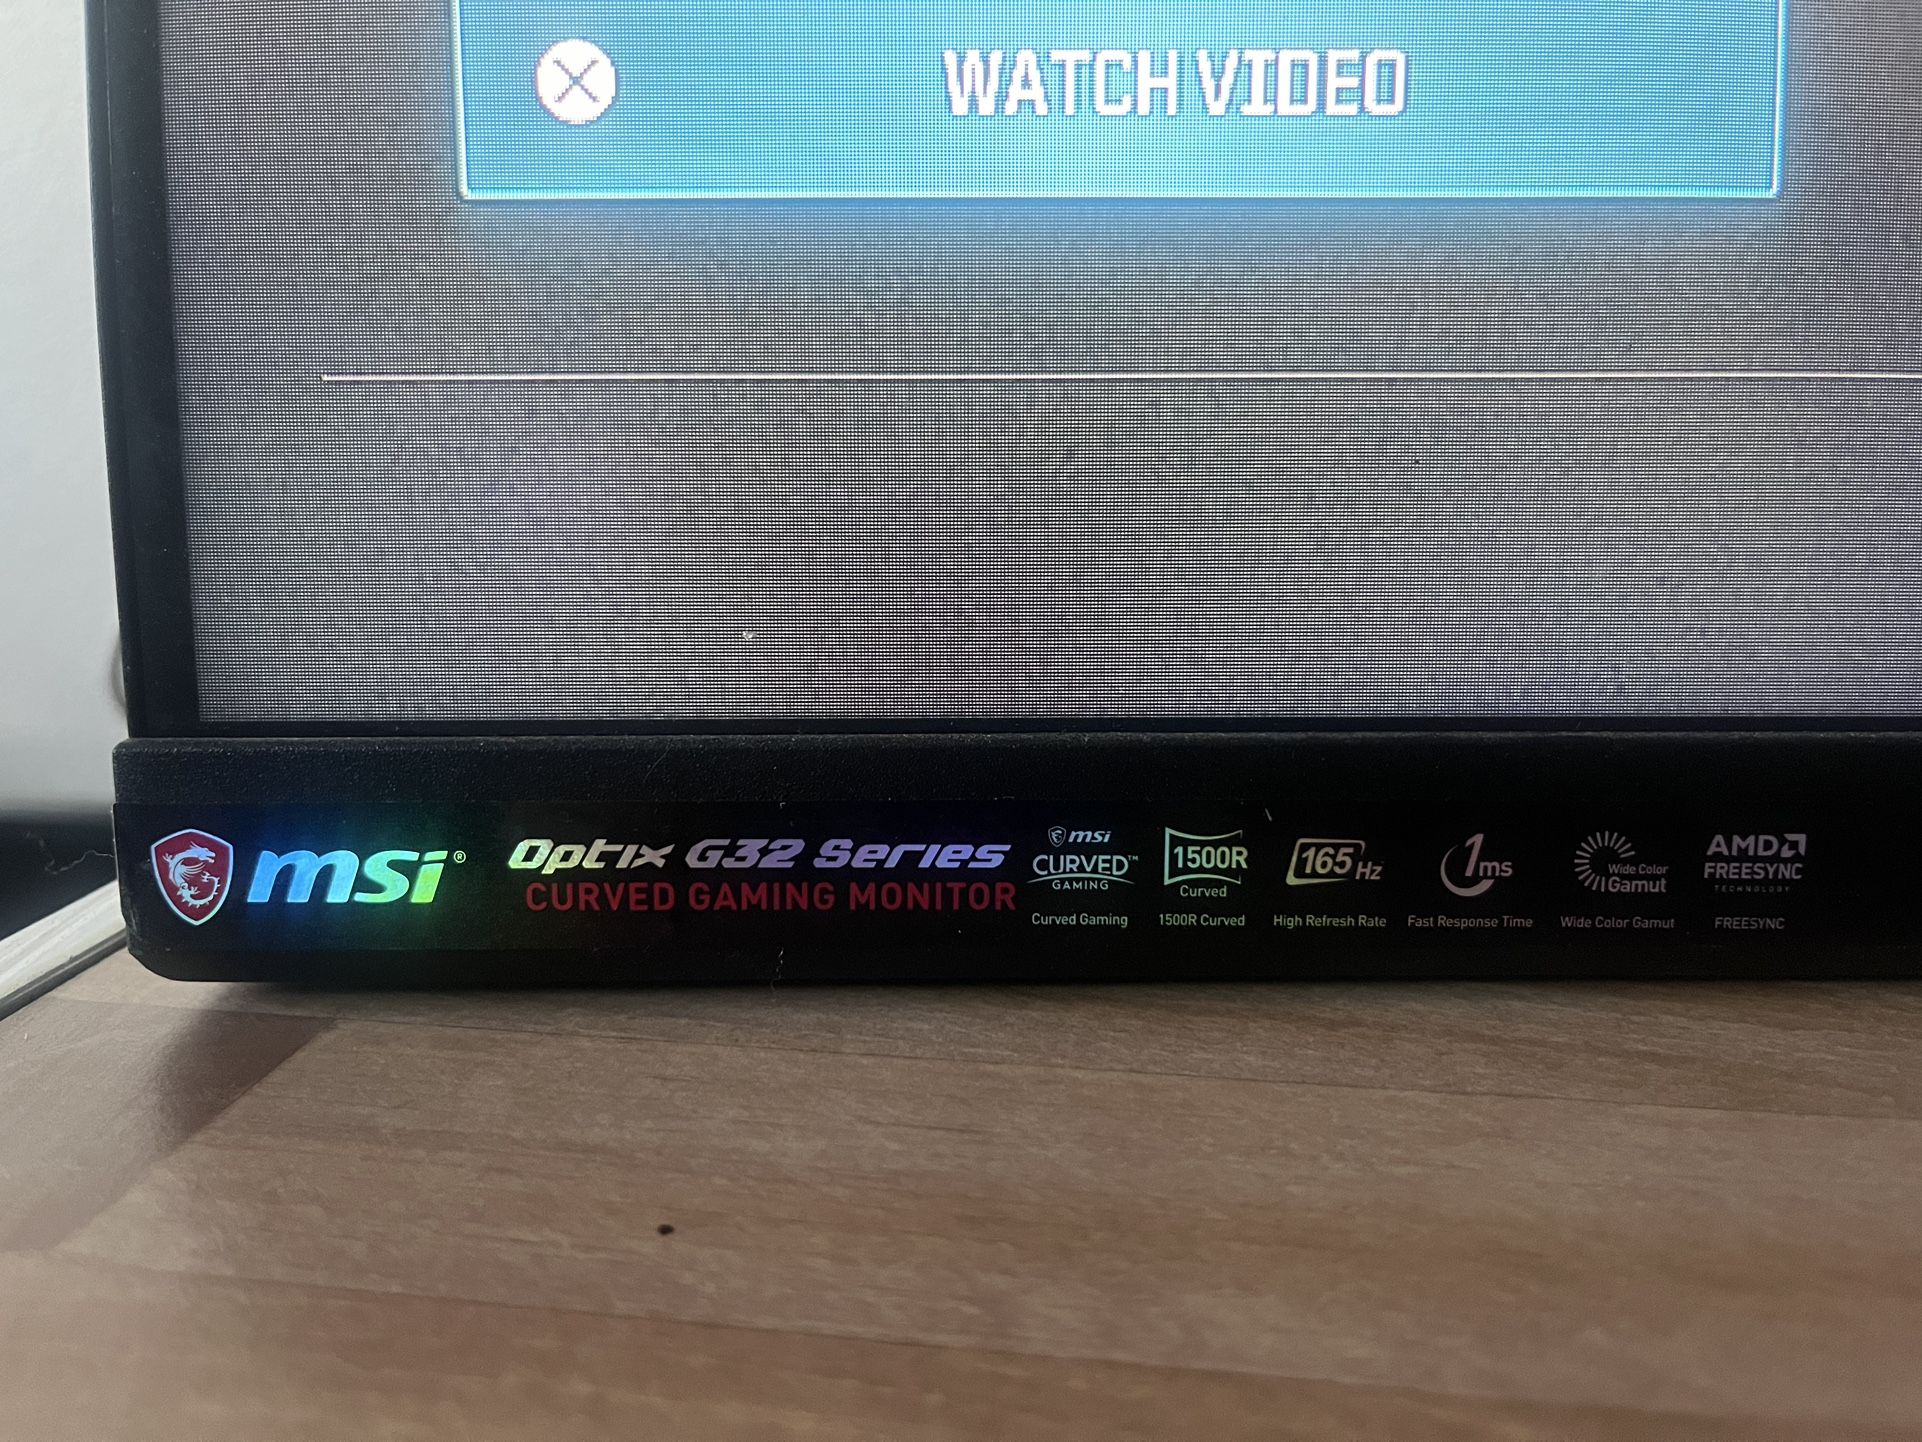 Brand new MSI optics G32 series curved gaming monitor